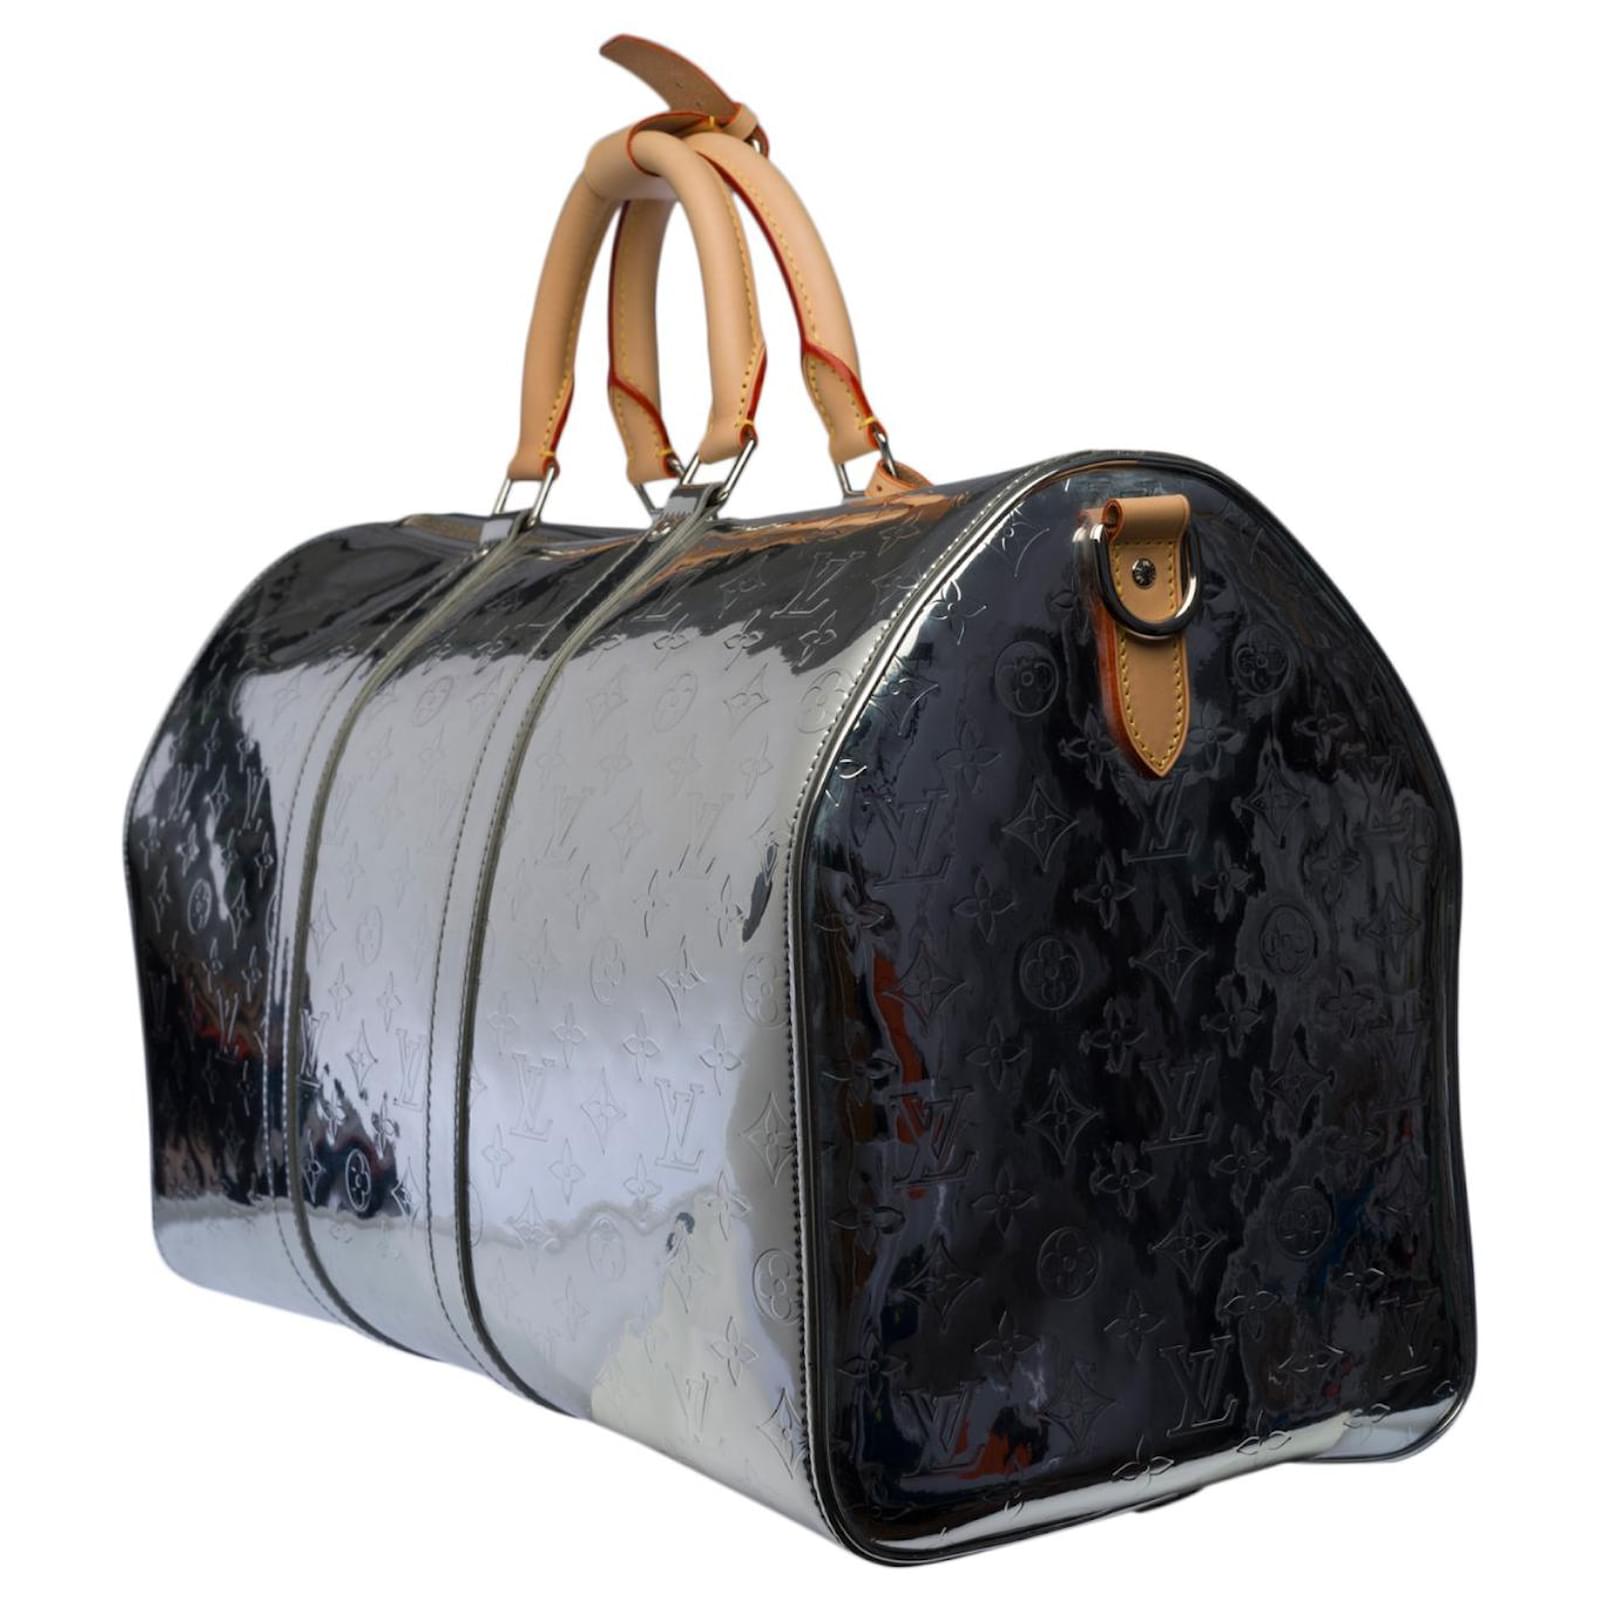 Louis Vuitton Kaleidoscopic Keepall Bag by Virgil